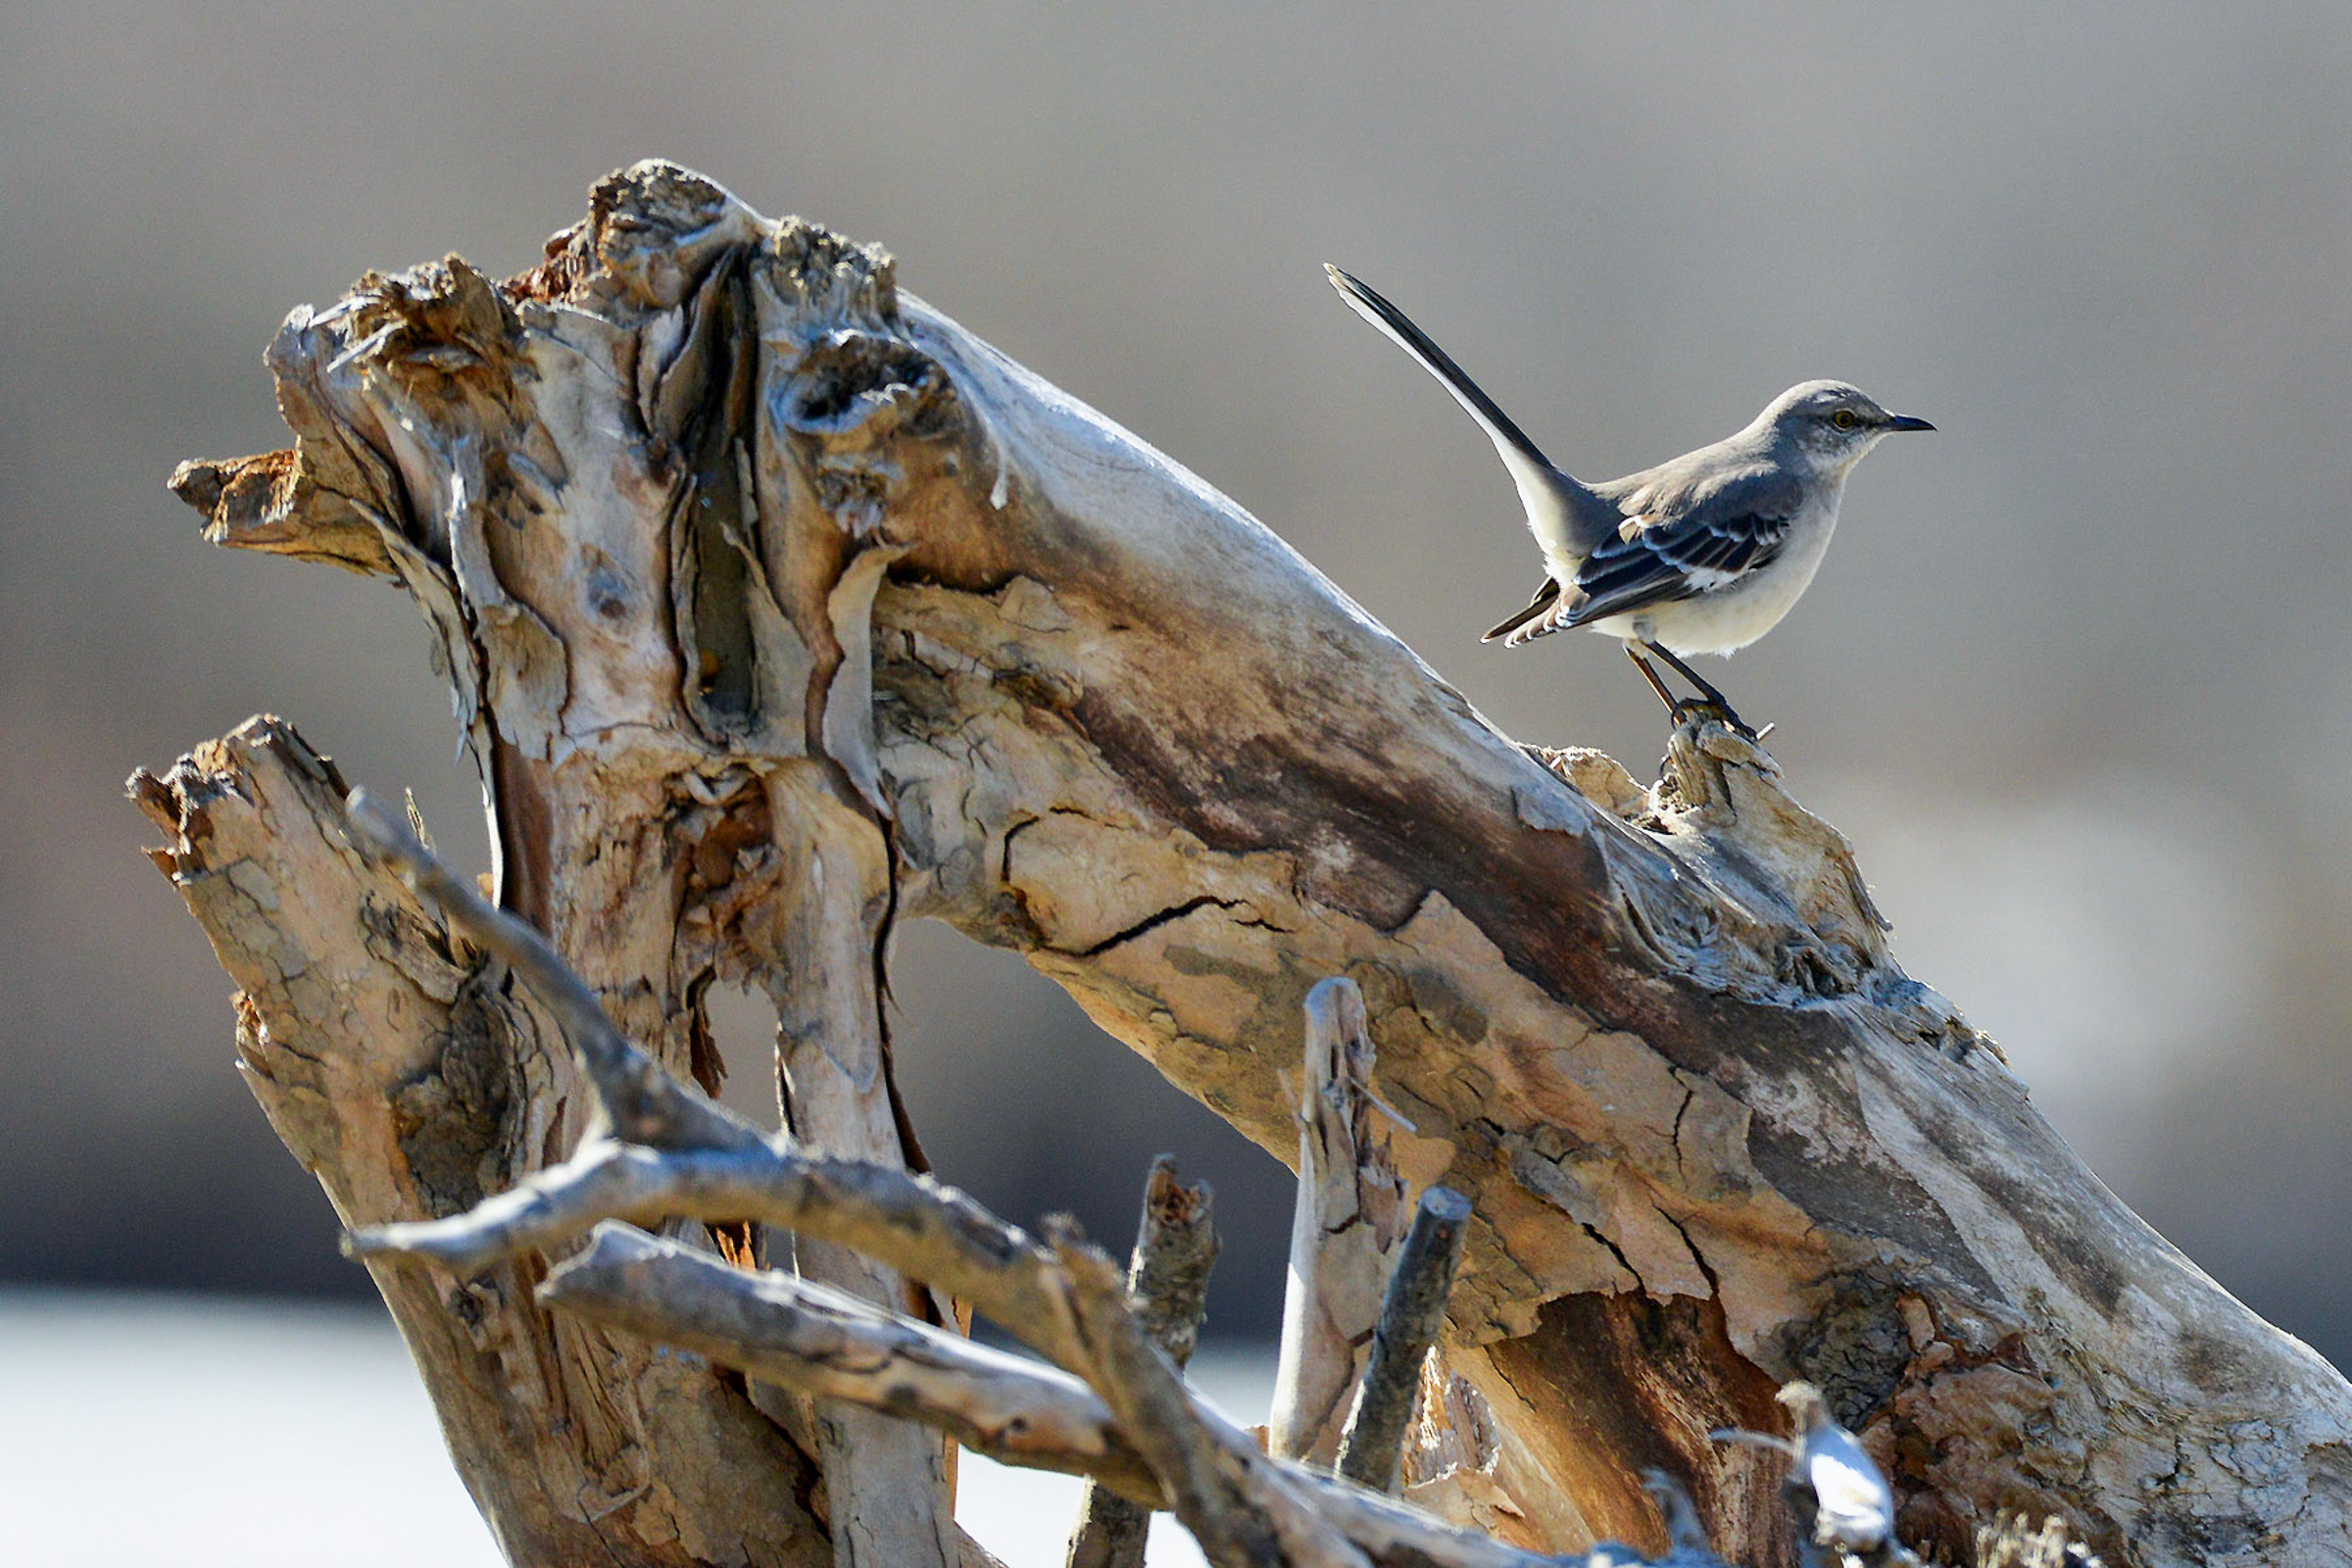 Northern Mockingbird standing on a log.